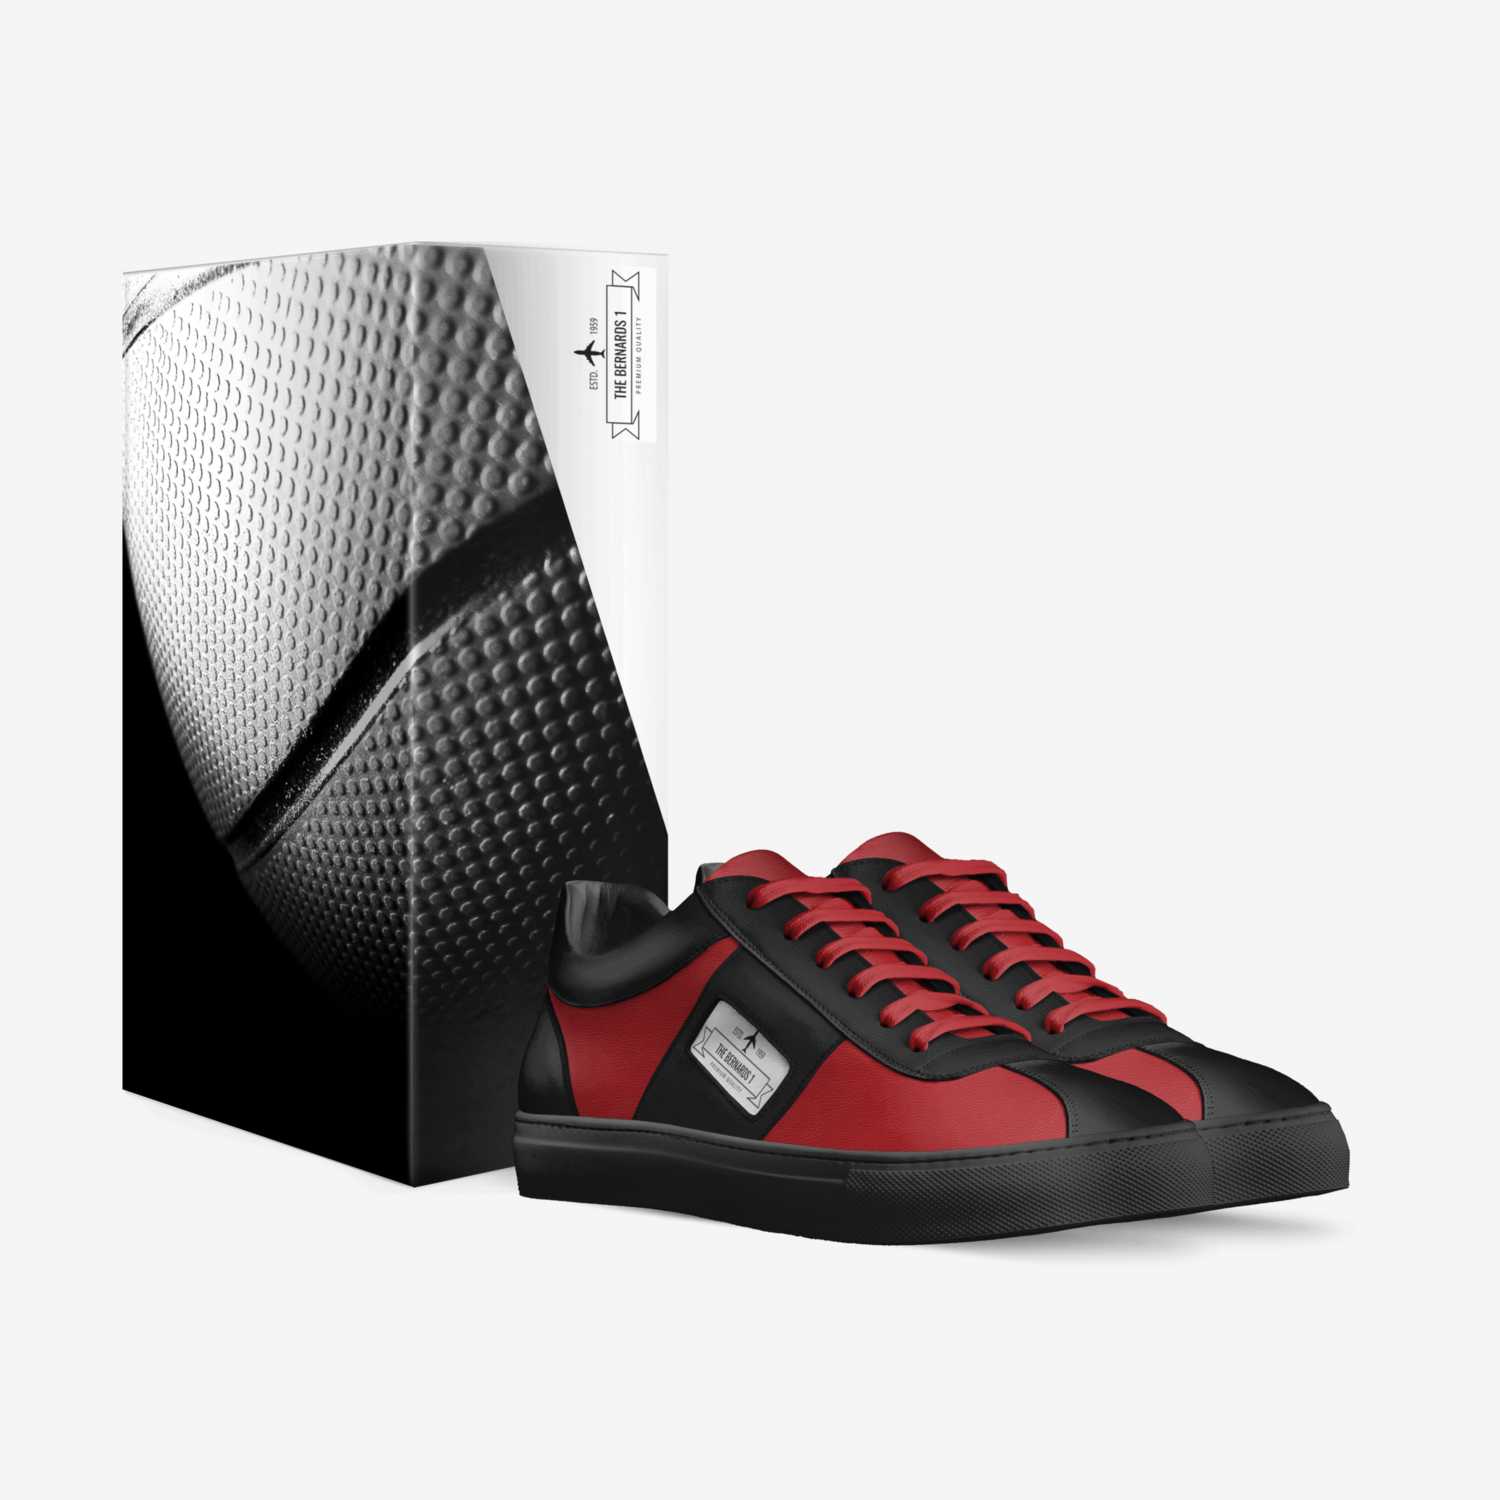 Bernards custom made in Italy shoes by Bernard | Box view